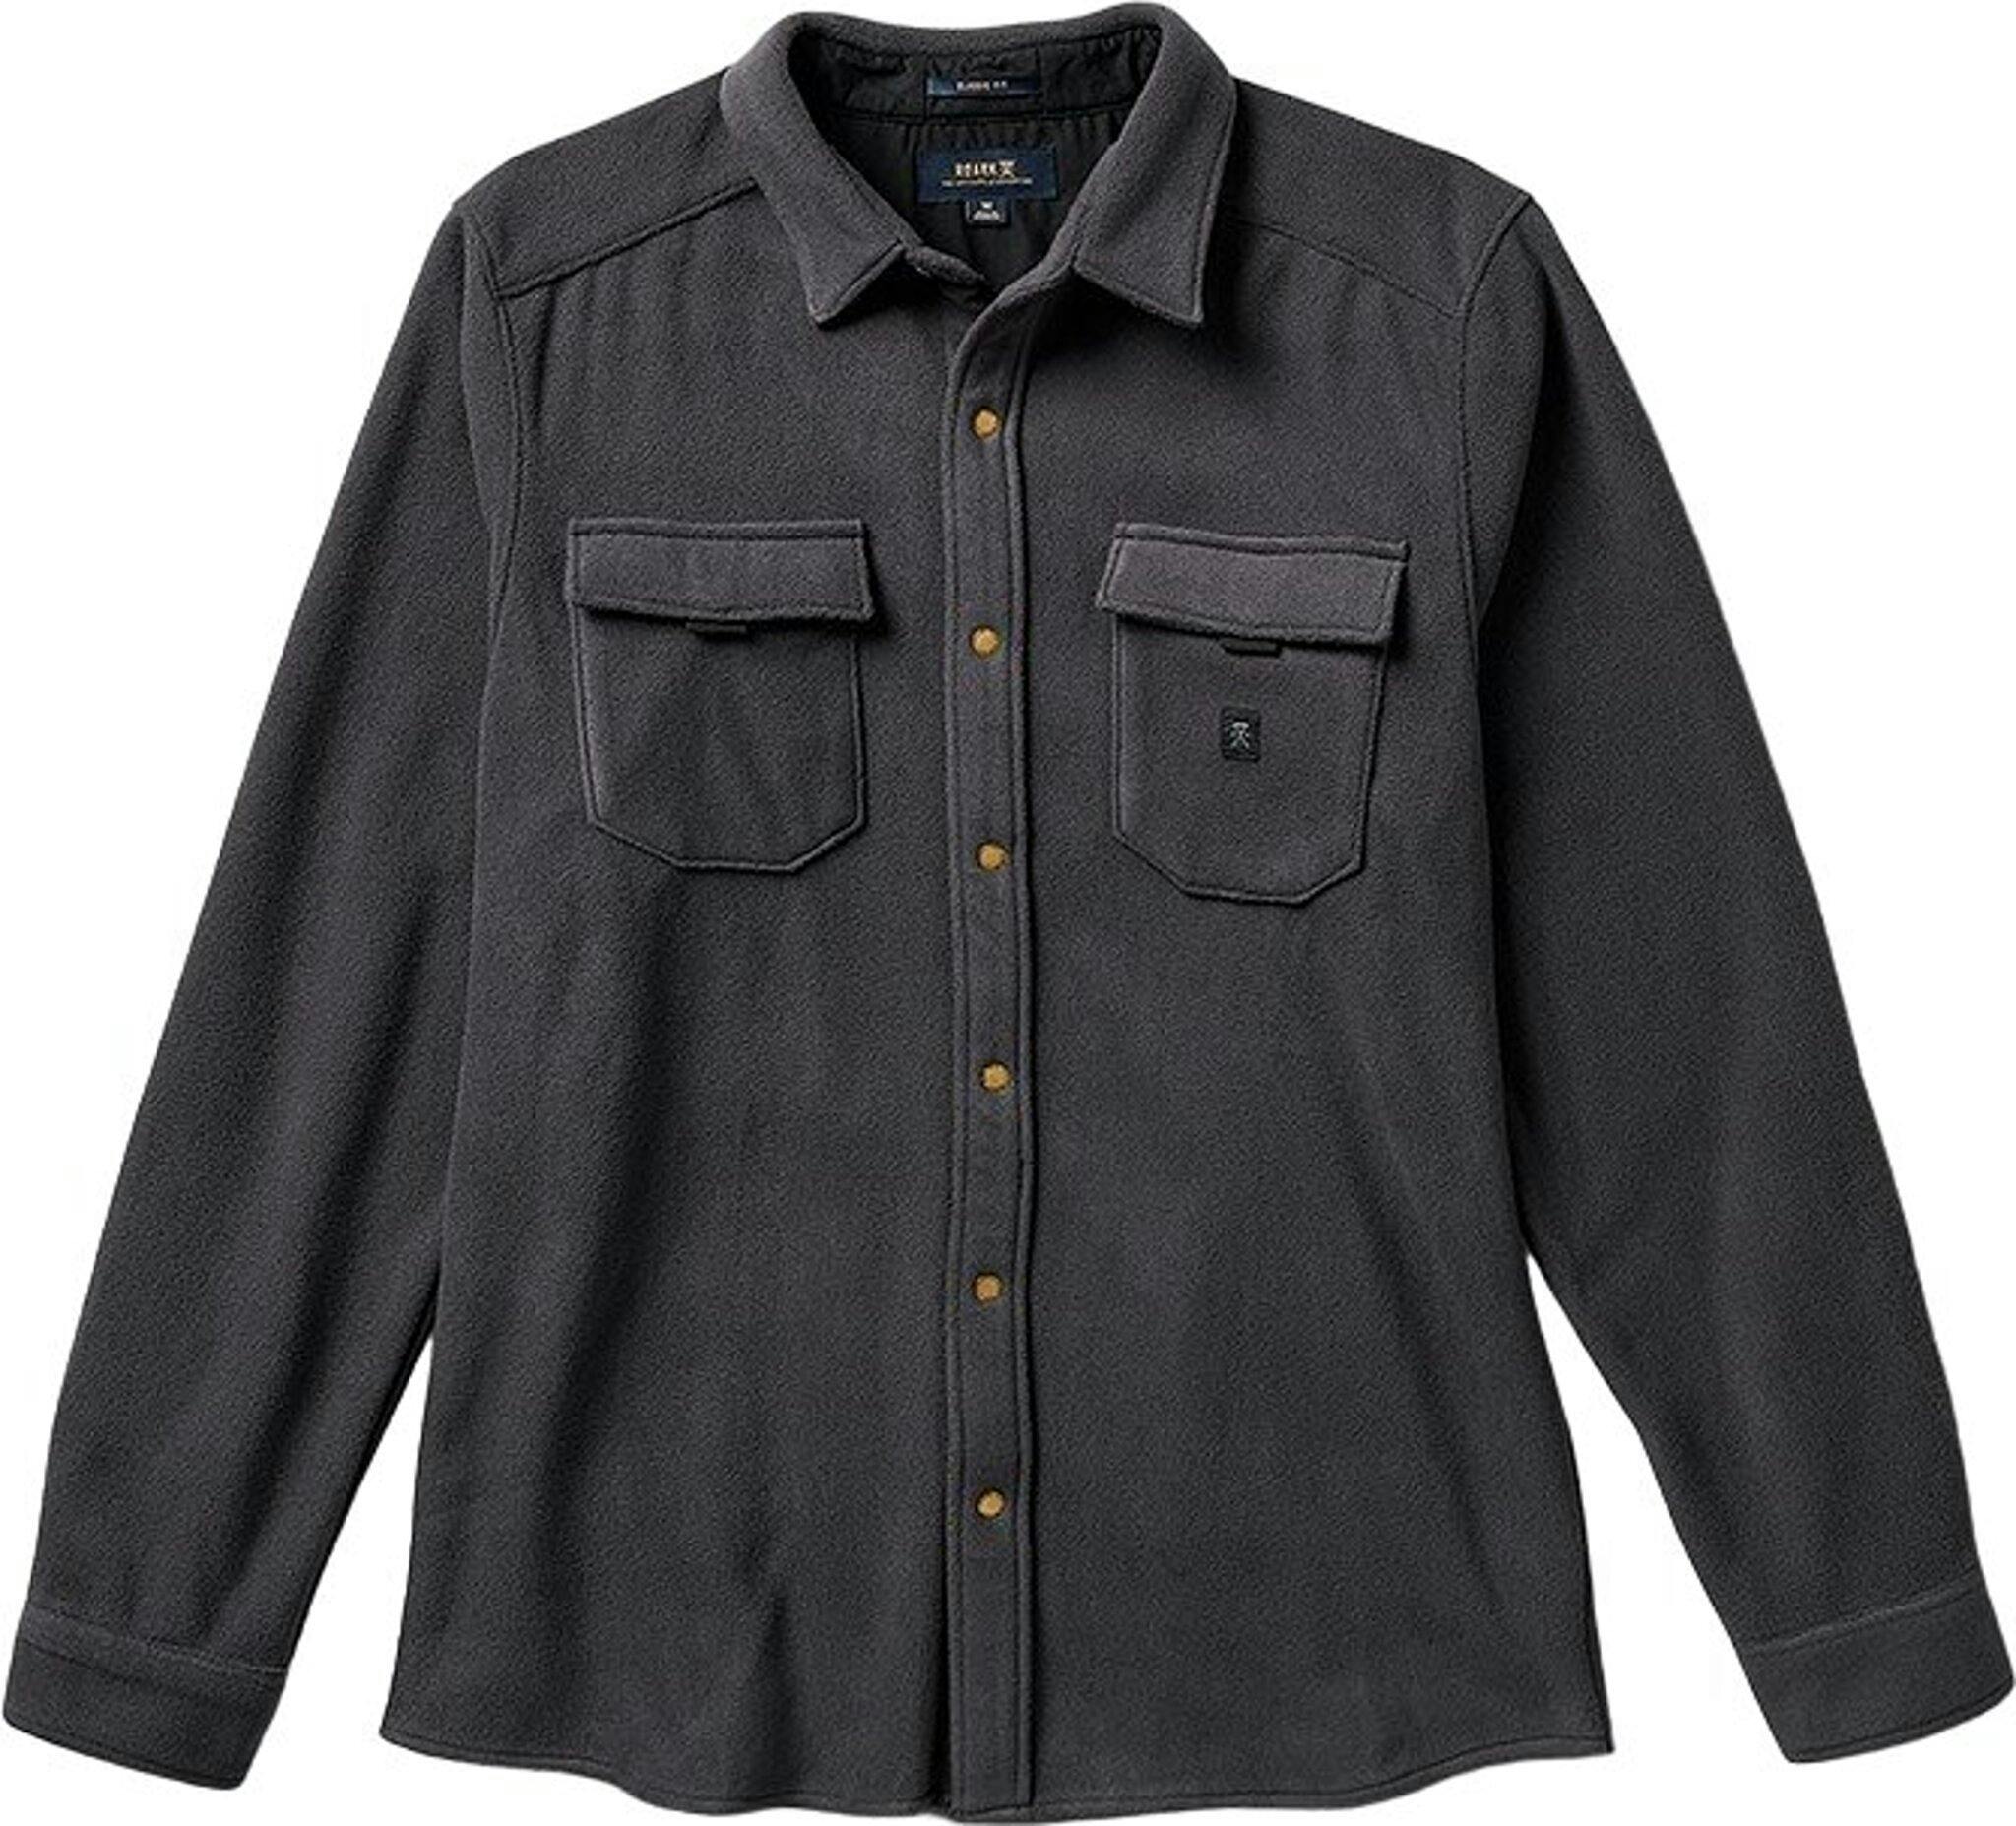 Product image for Diablo Polar Long Sleeve Flannel Shirt - Men's